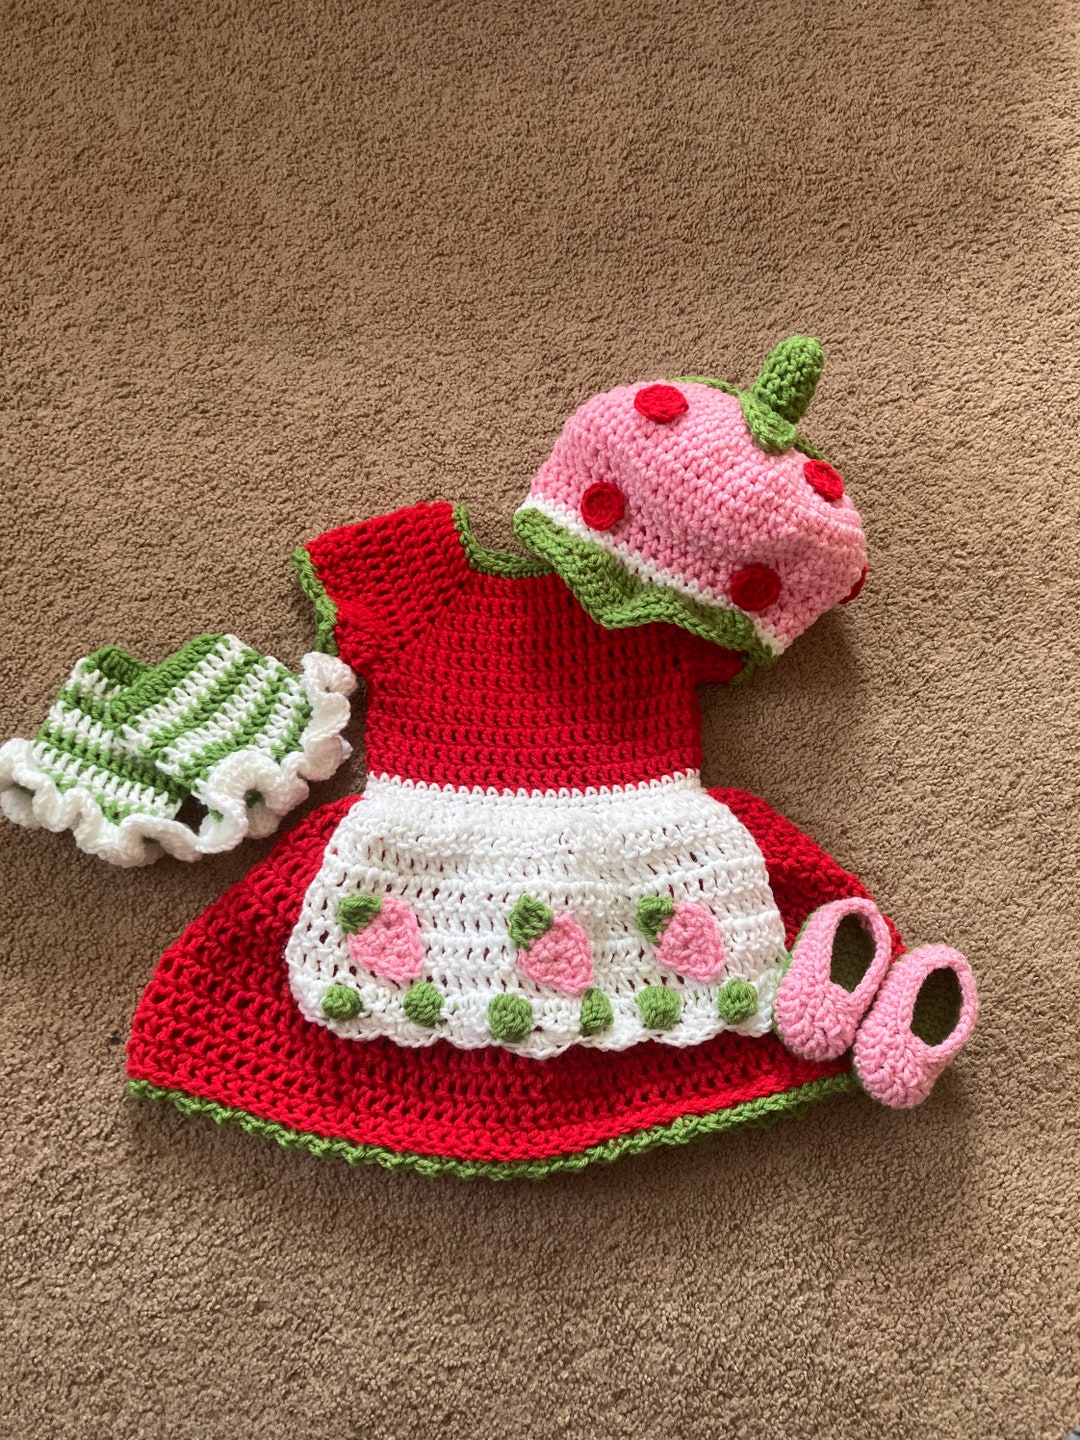 how to crochet trendy pinterest leg warmers! 💗🤍💖 